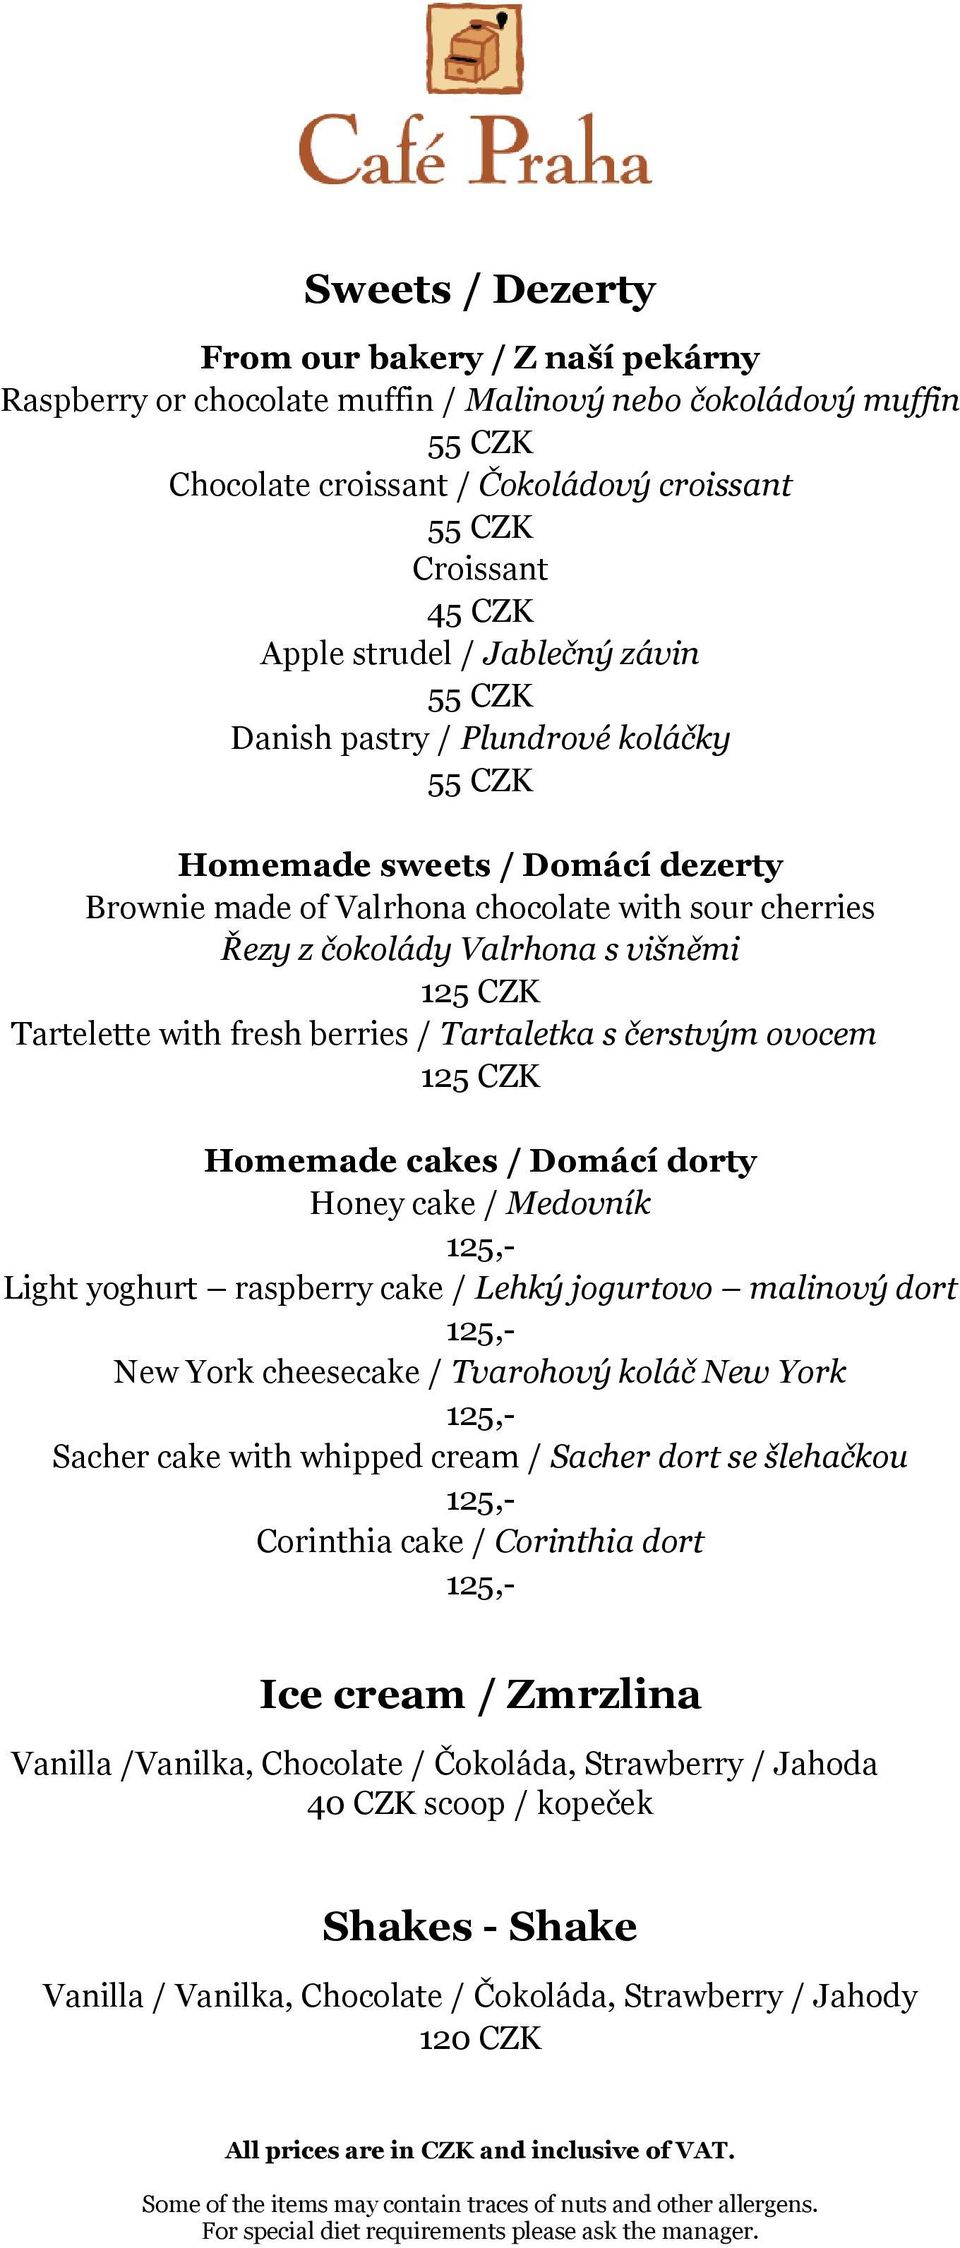 CZK Tartelette with fresh berries / Tartaletka s čerstvým ovocem 125 CZK Homemade cakes / Domácí dorty Honey cake / Medovník Light yoghurt raspberry cake / Lehký jogurtovo malinový dort New York